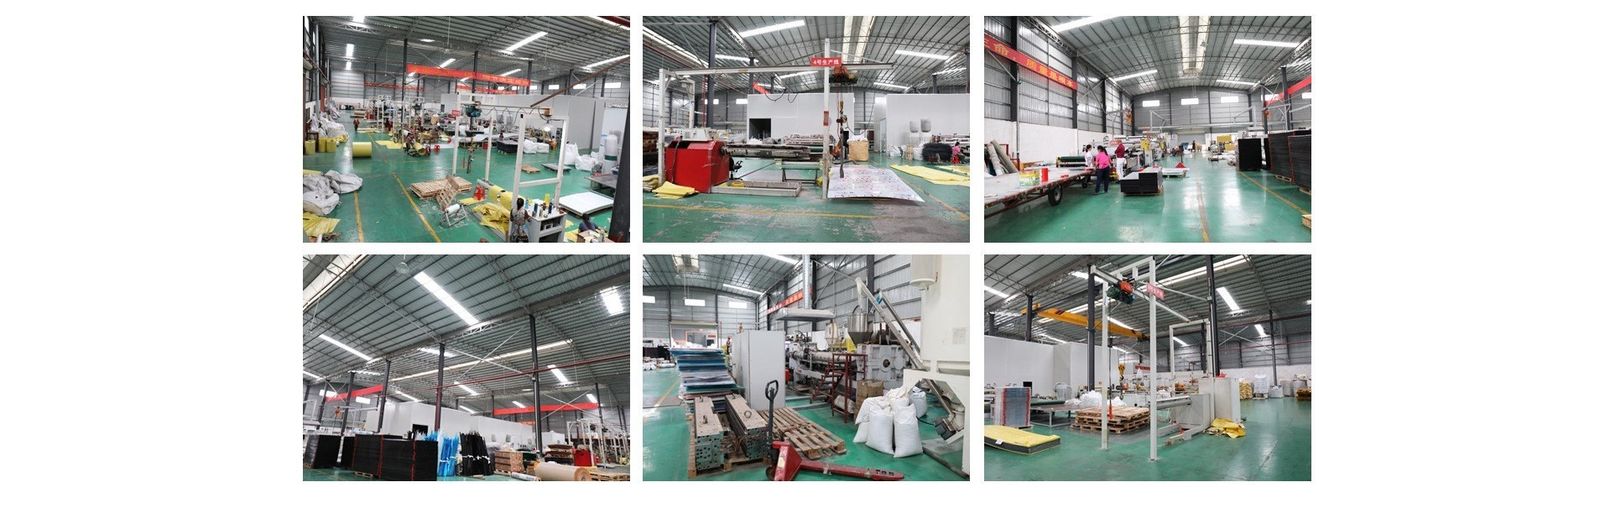 Chongqing Niubai Electromechanical Equipment Co., Ltd. 제조업체의 생산 라인